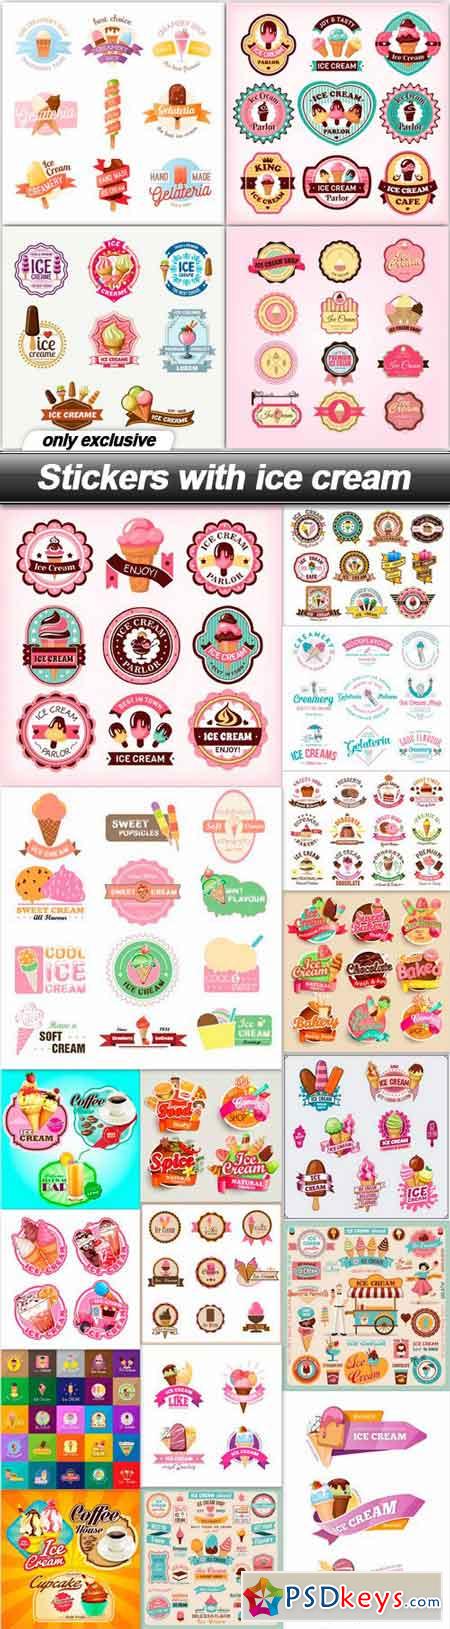 Stickers with ice cream - 21 EPS